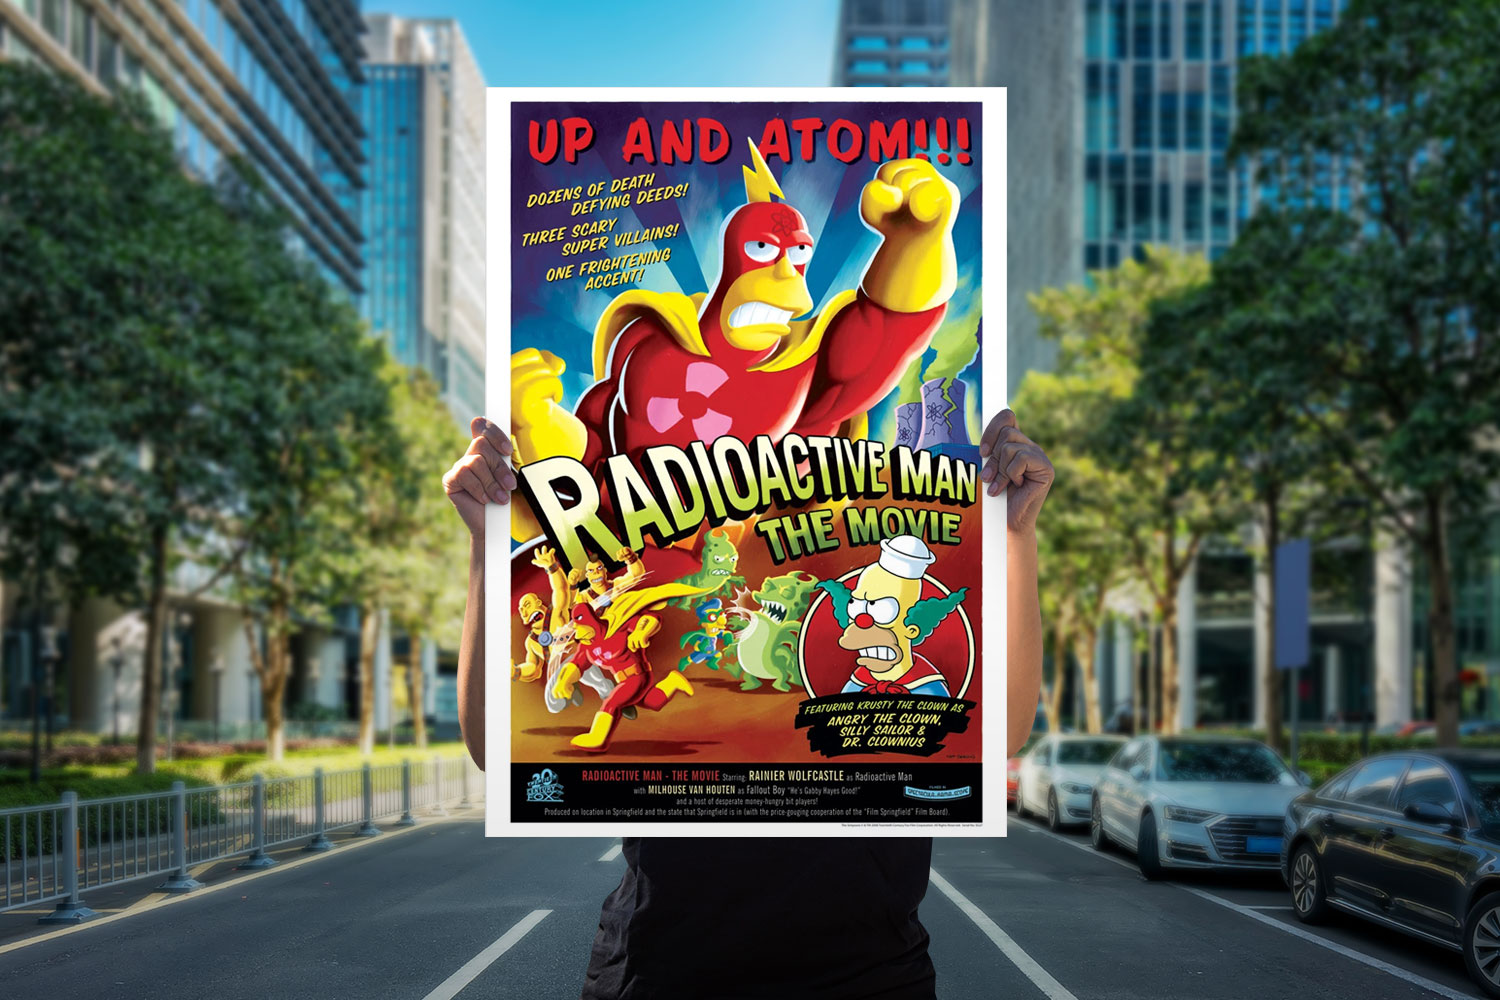 Radio Activeman #136 Simpsons Poster 24X36 inches